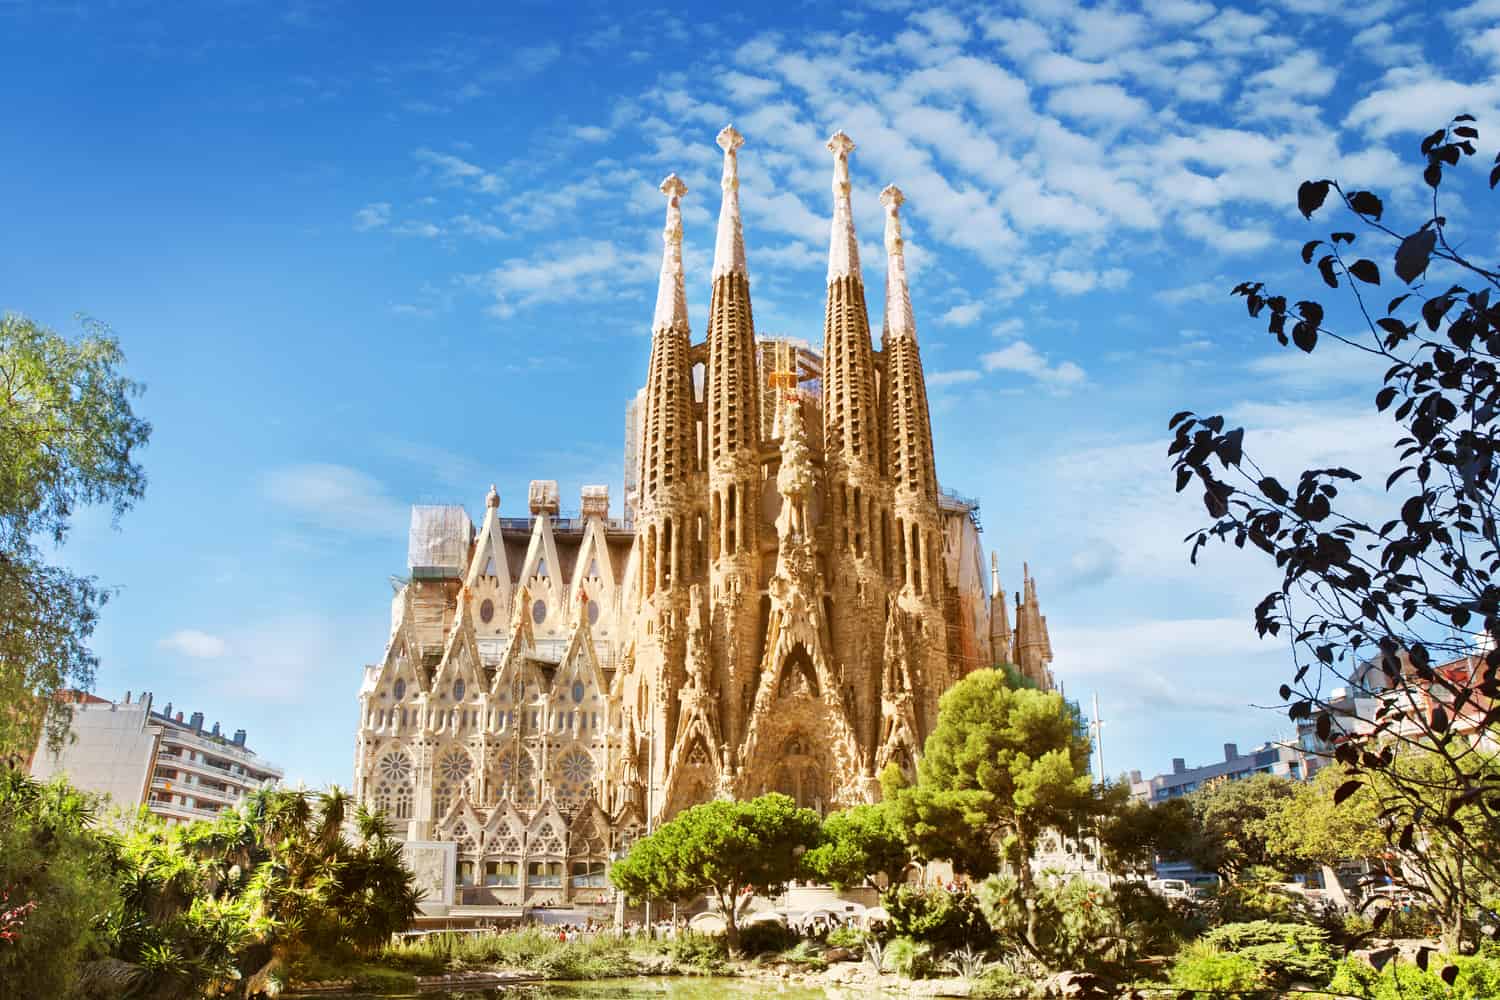 Gaudi's Sagrada Familia in Barcelona. sagrada familia 3 days in Barcelona, 3 day barcelona itinerary